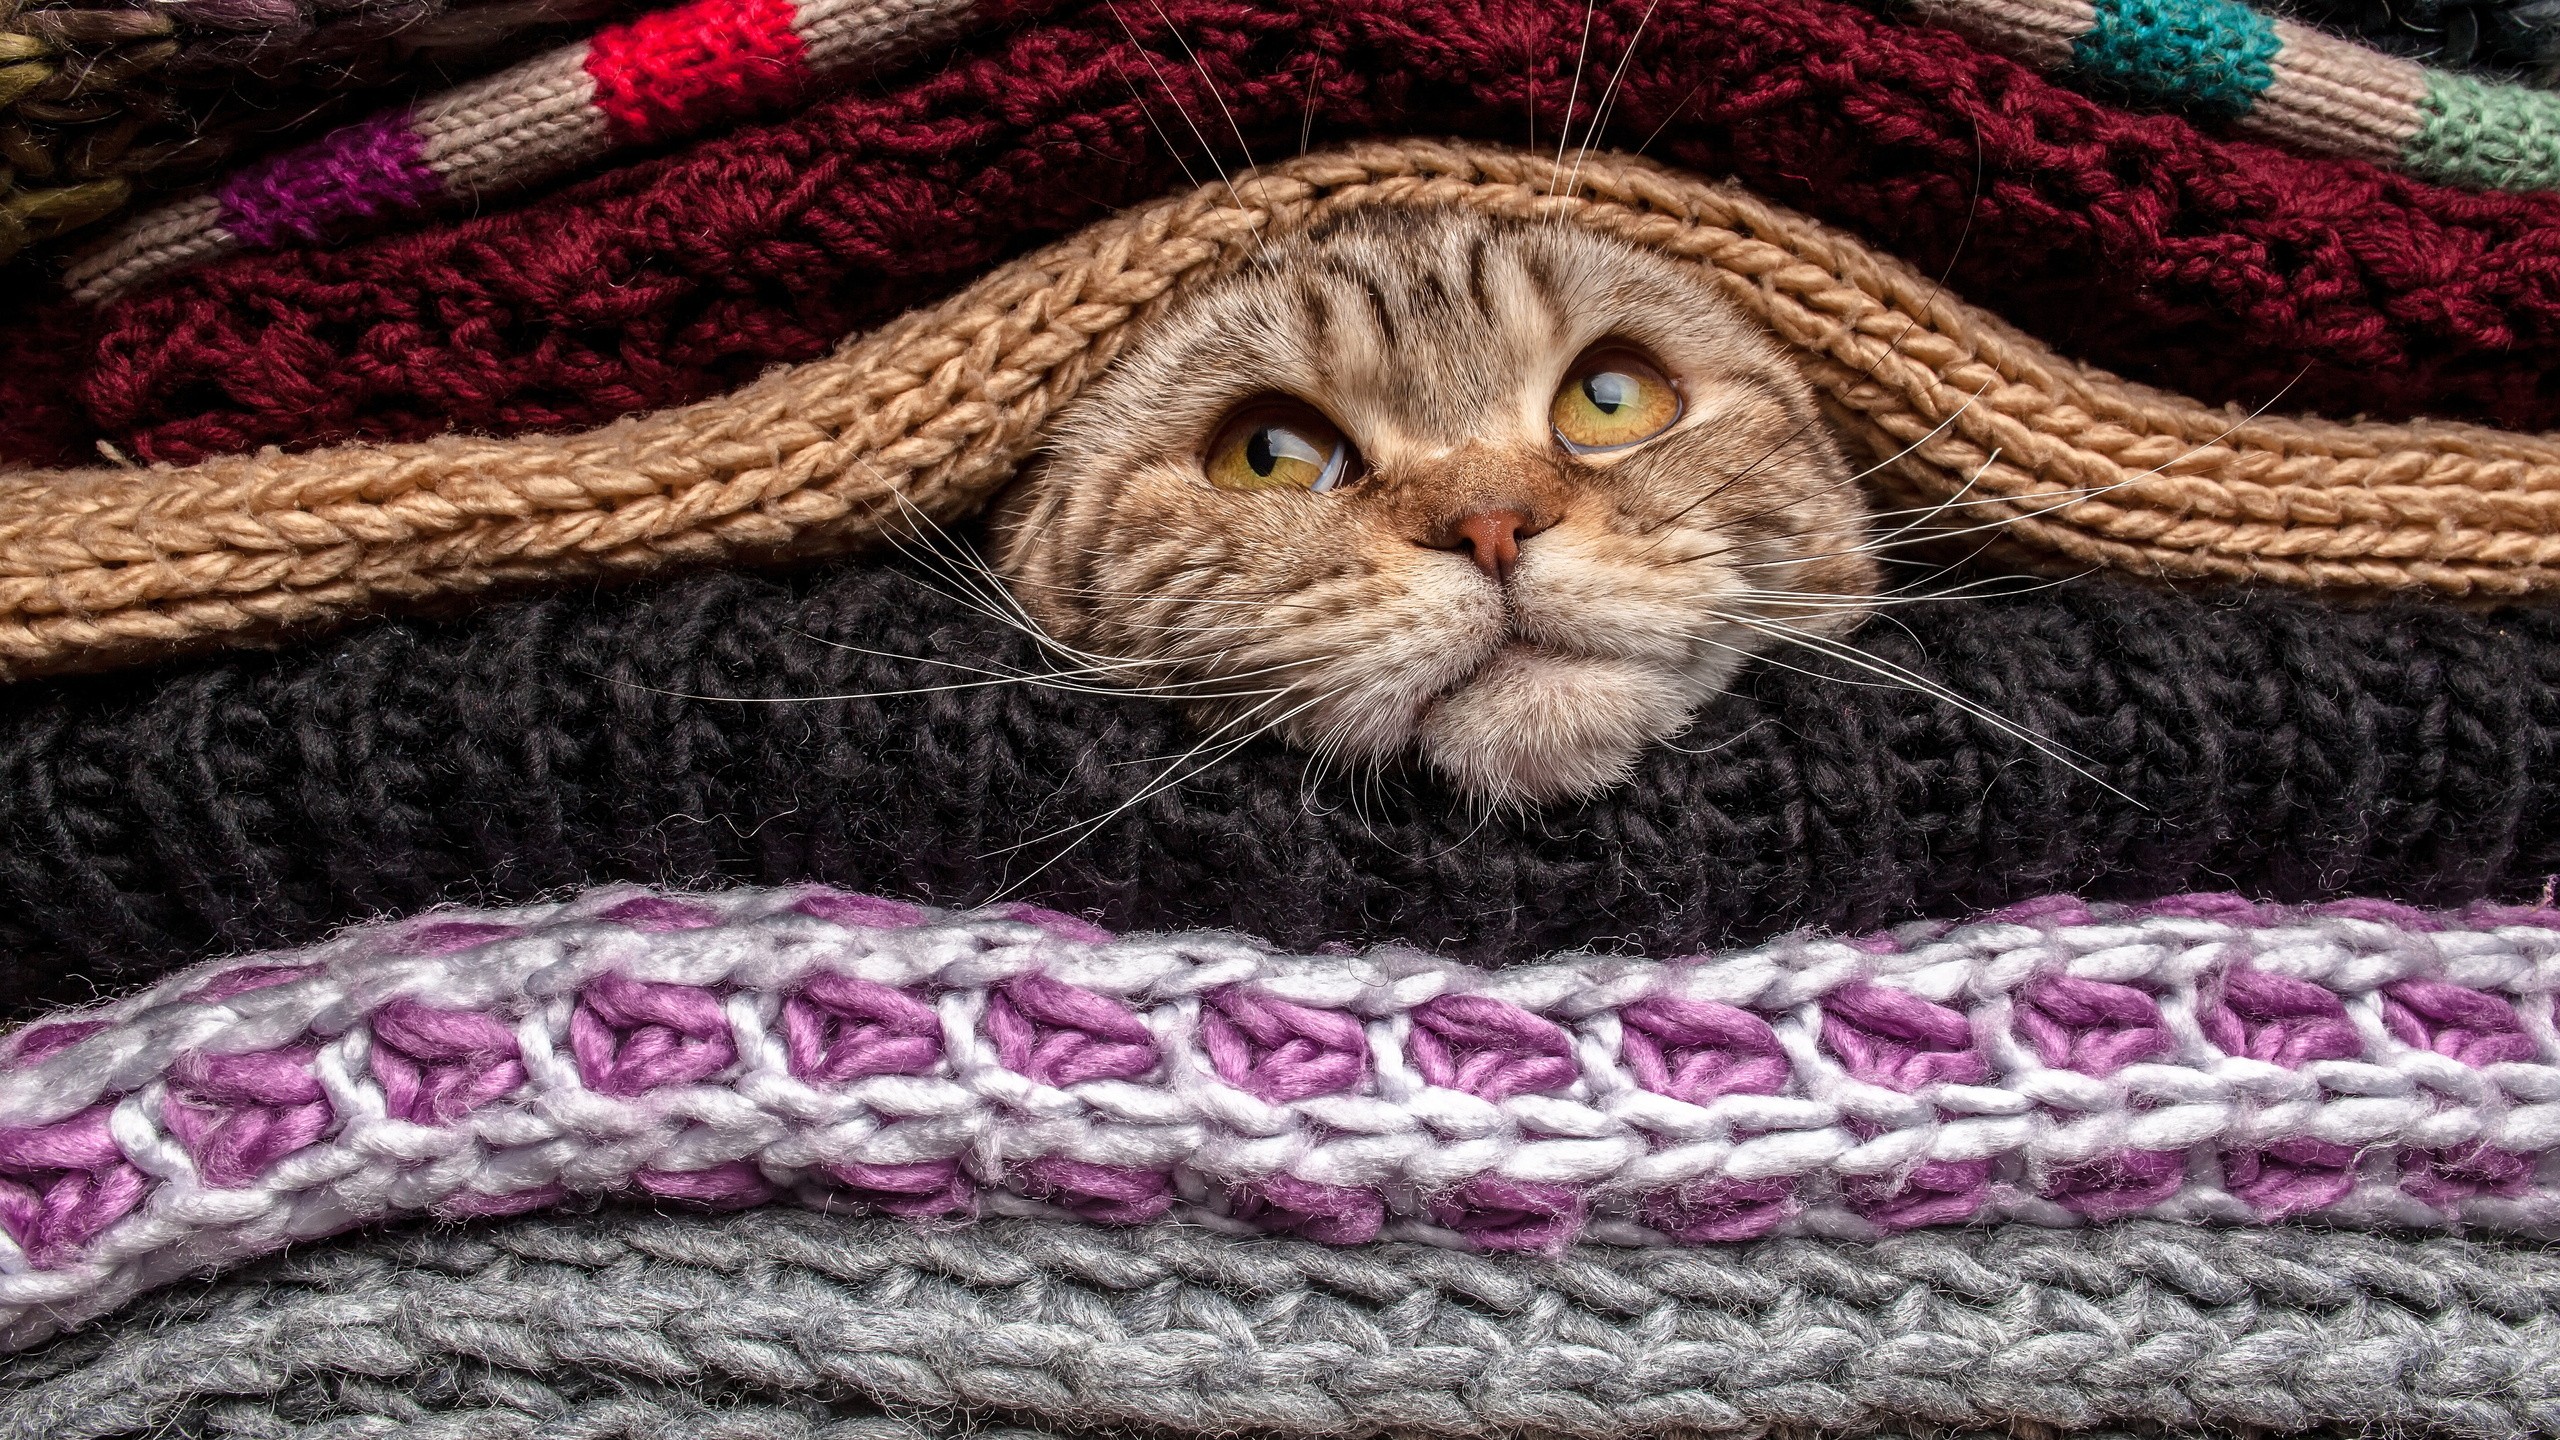 General 2560x1440 animals cats pet head sweater wool mammals feline pussy peek closeup